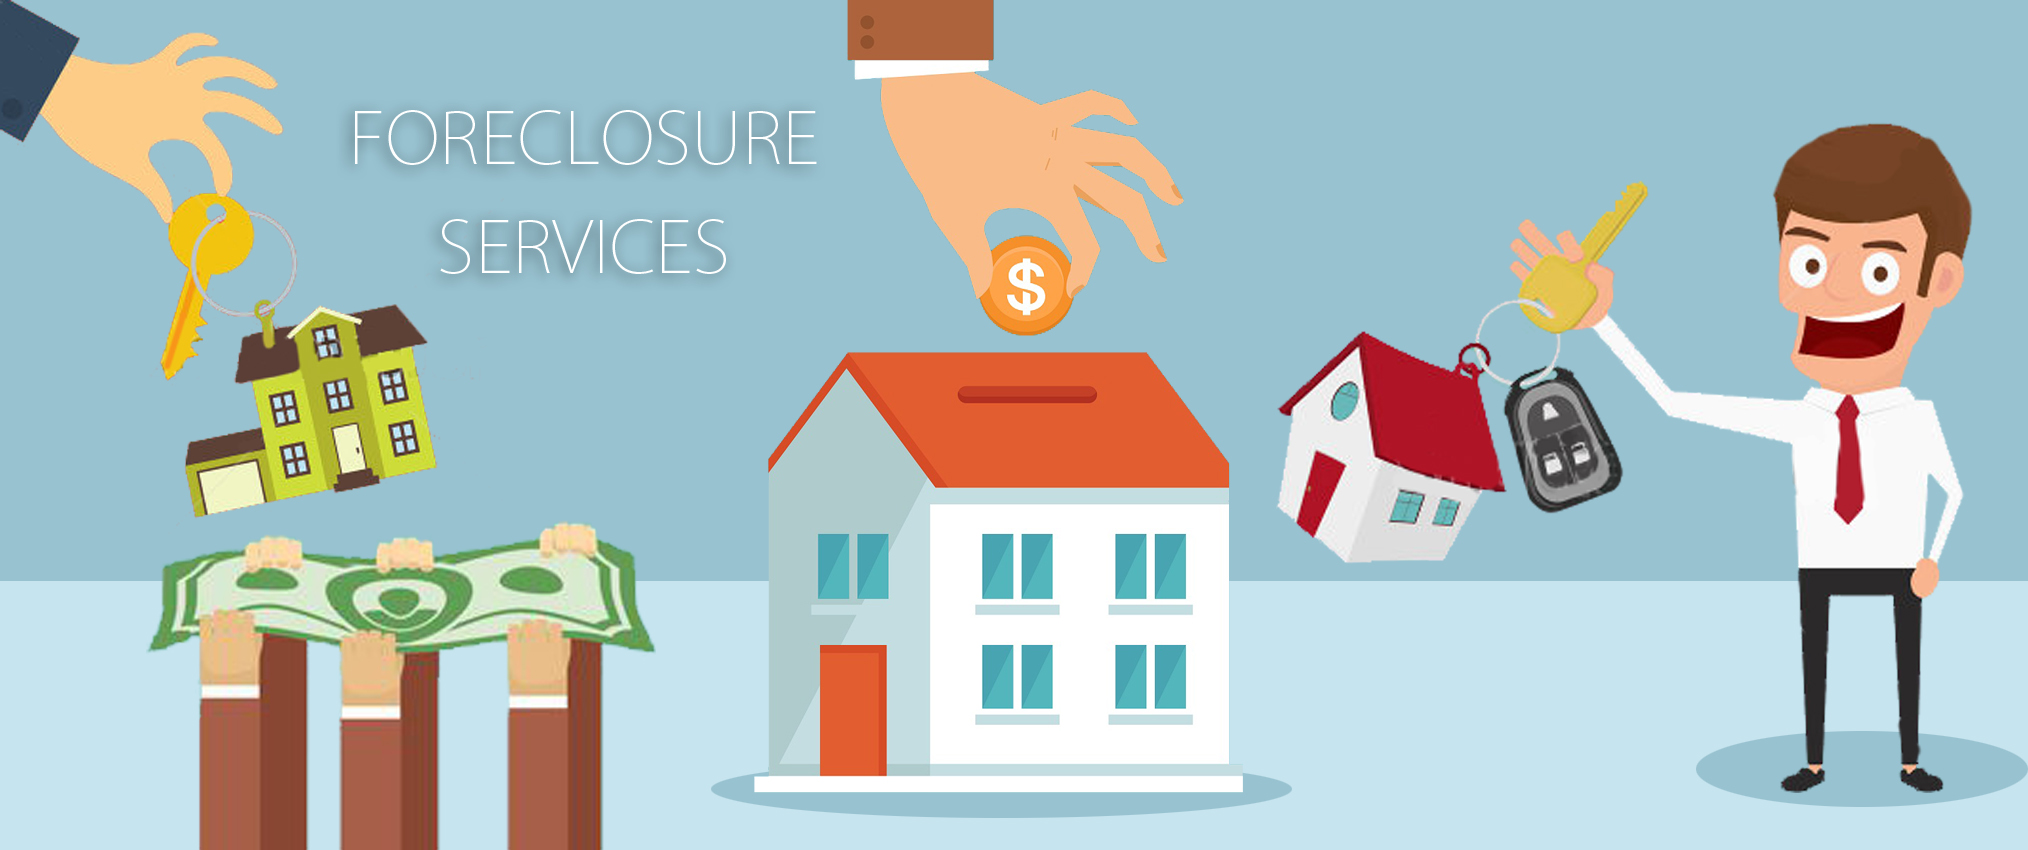 Foreclosure Services